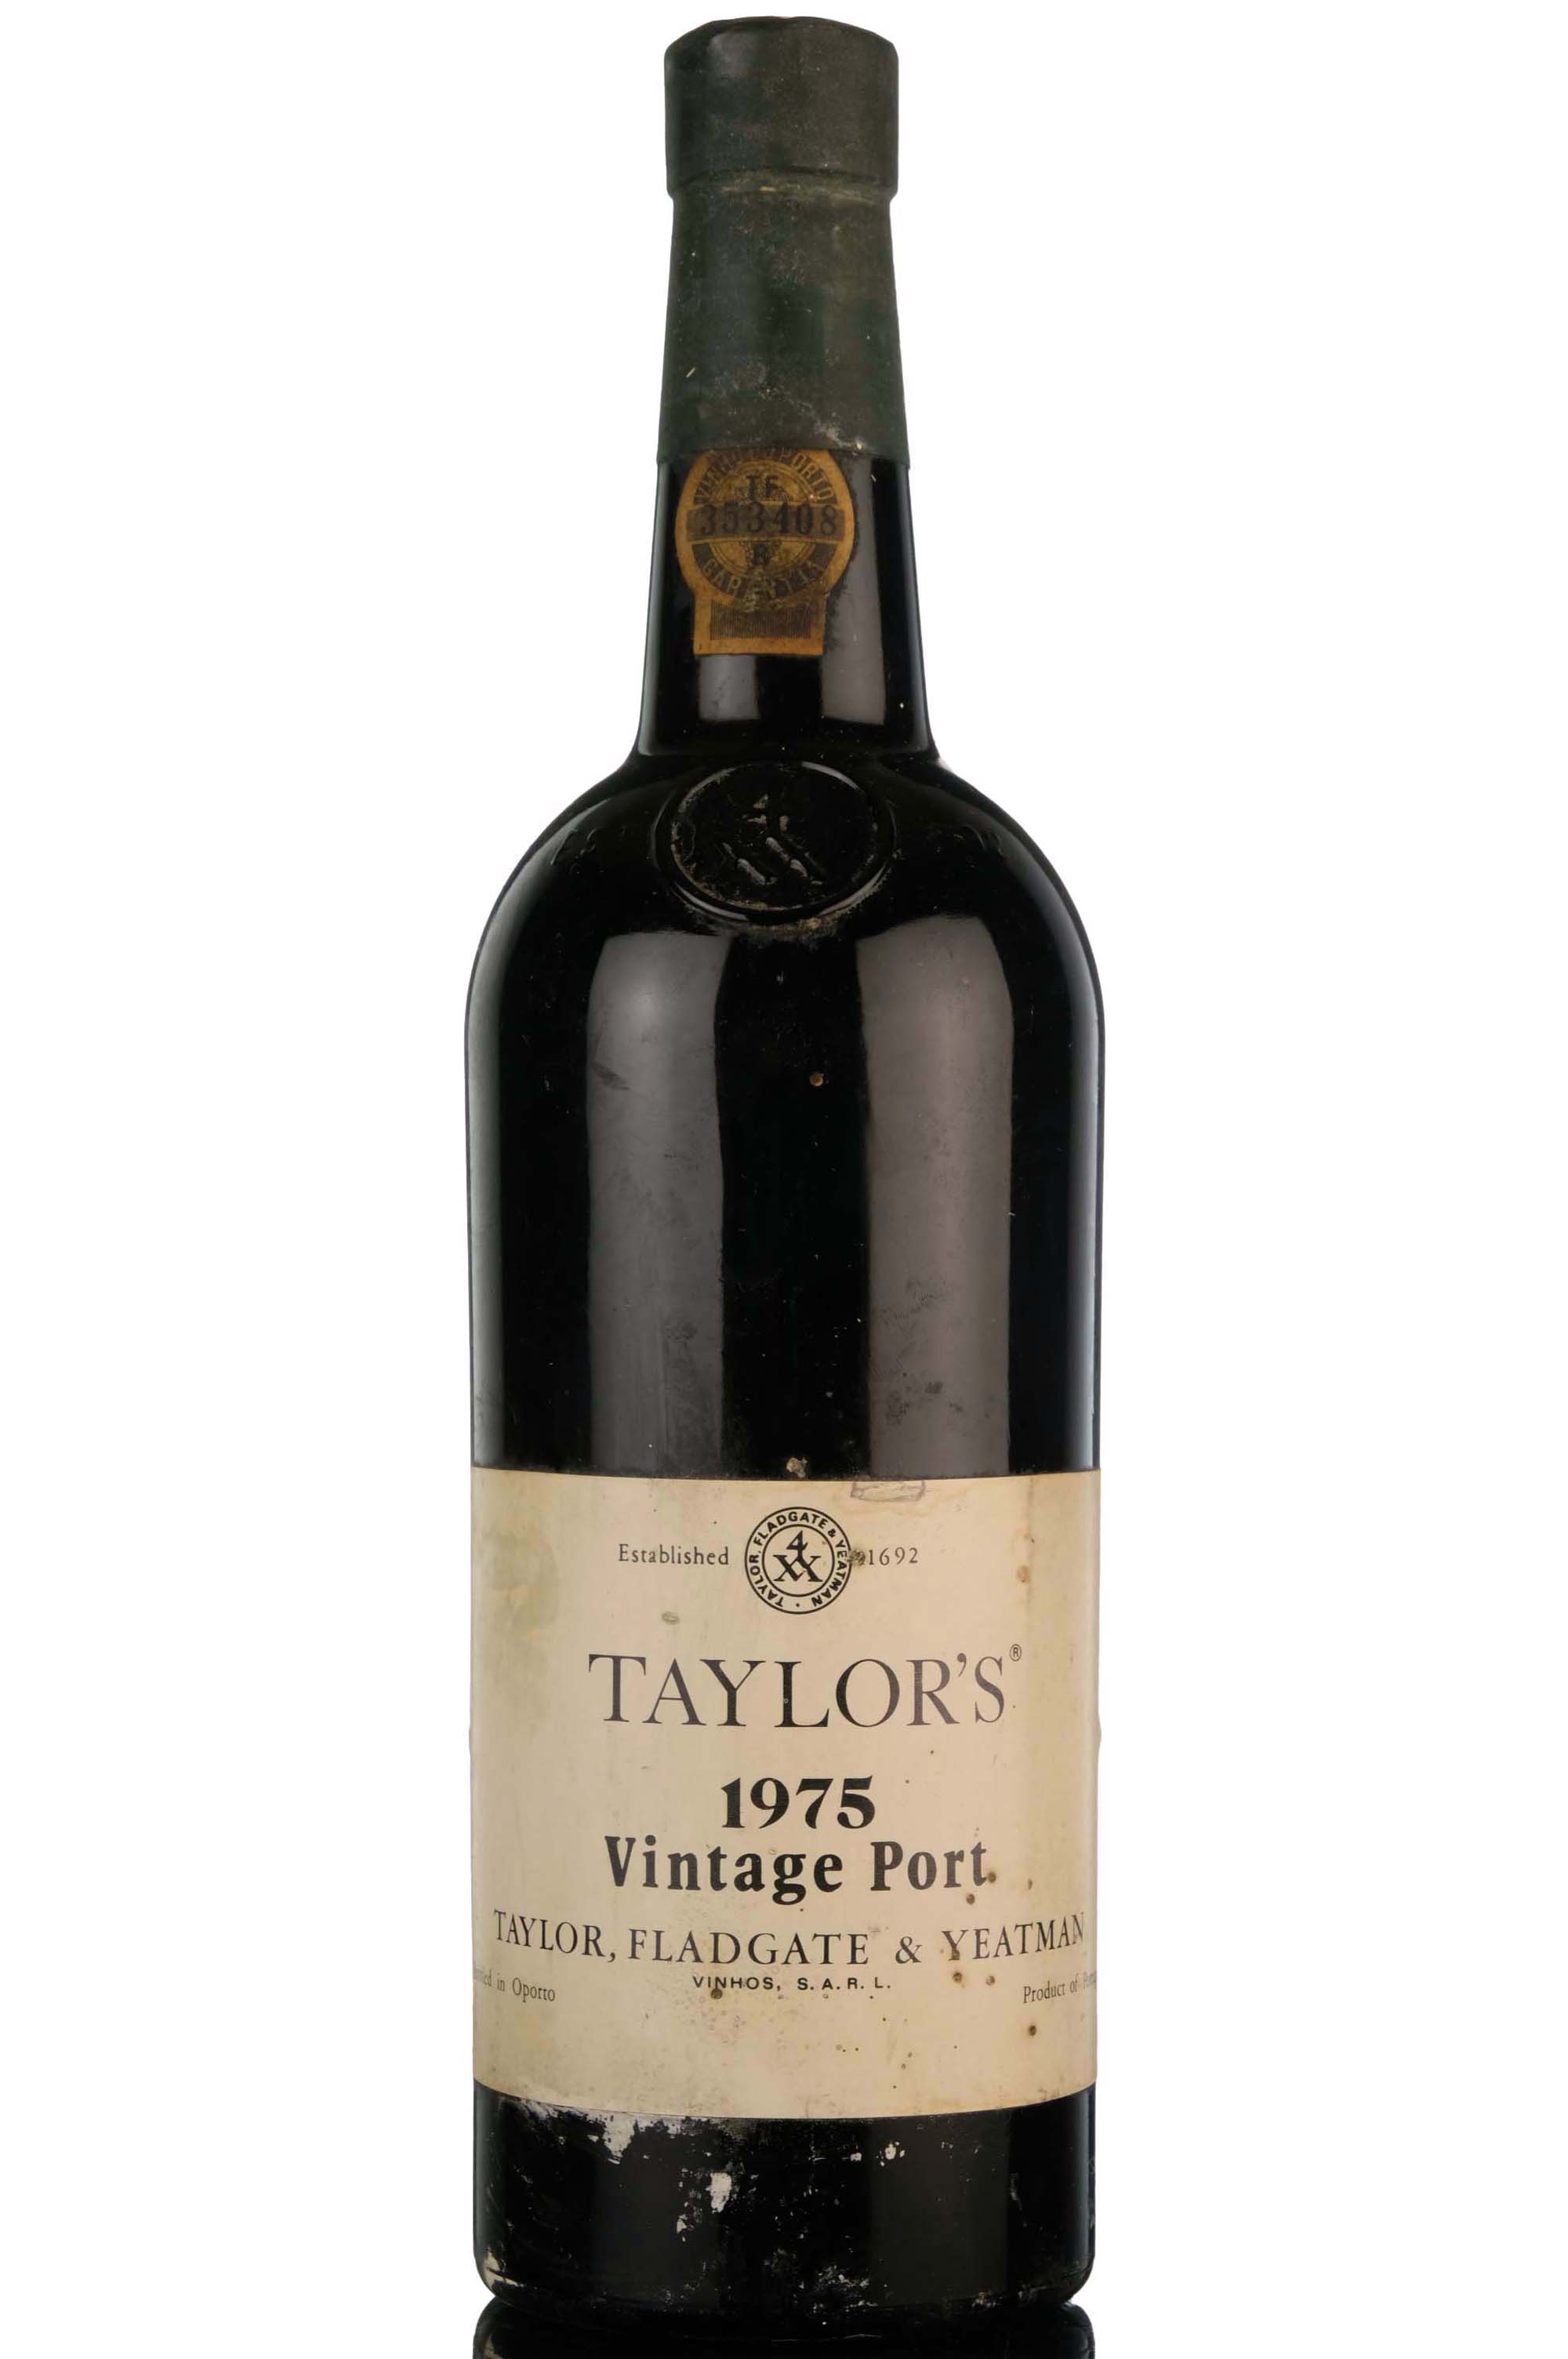 Taylors 1975 Vintage Port